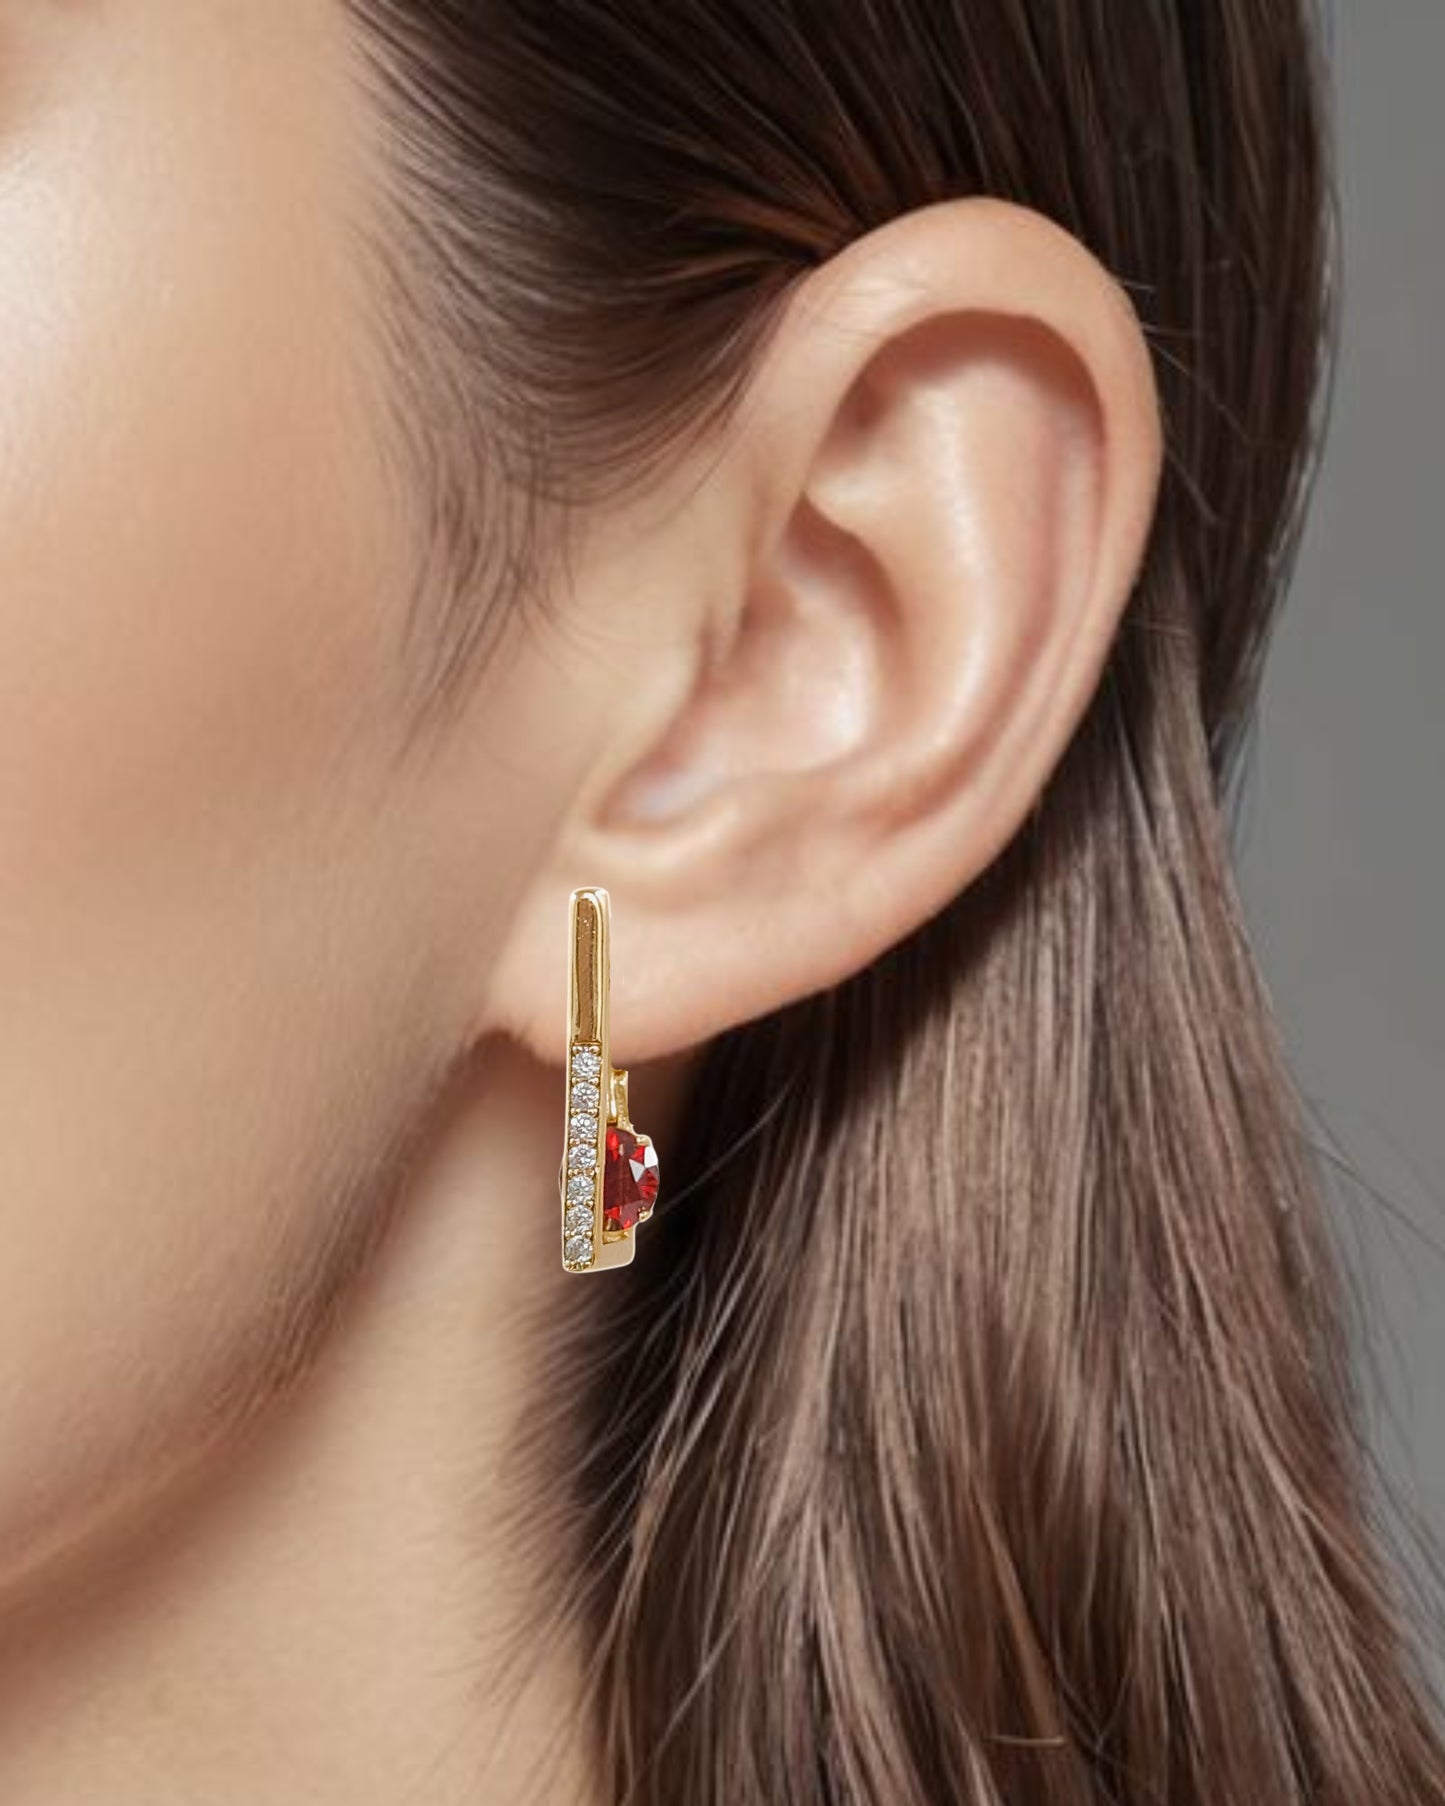 Bdiva 18k Gold Plated Ruby Hoops Earrings